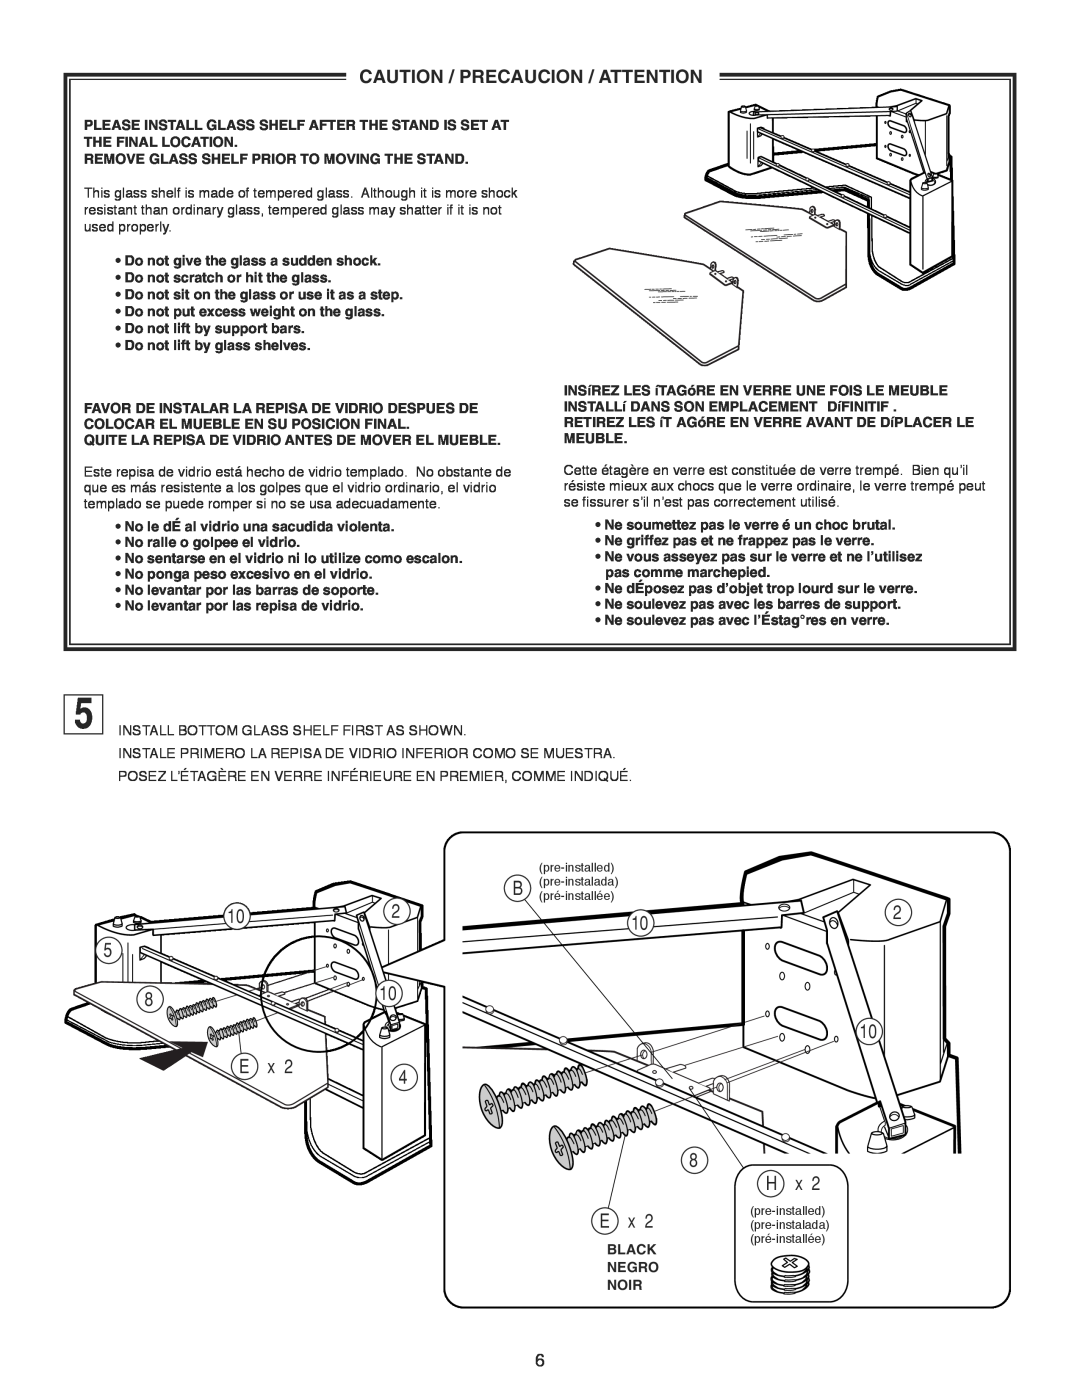 Sony SU-36XBR8 manual 10 8 E, 2 10 H, Caution / Precaucion / Attention, Remove Glass Shelf Prior To Moving The Stand 